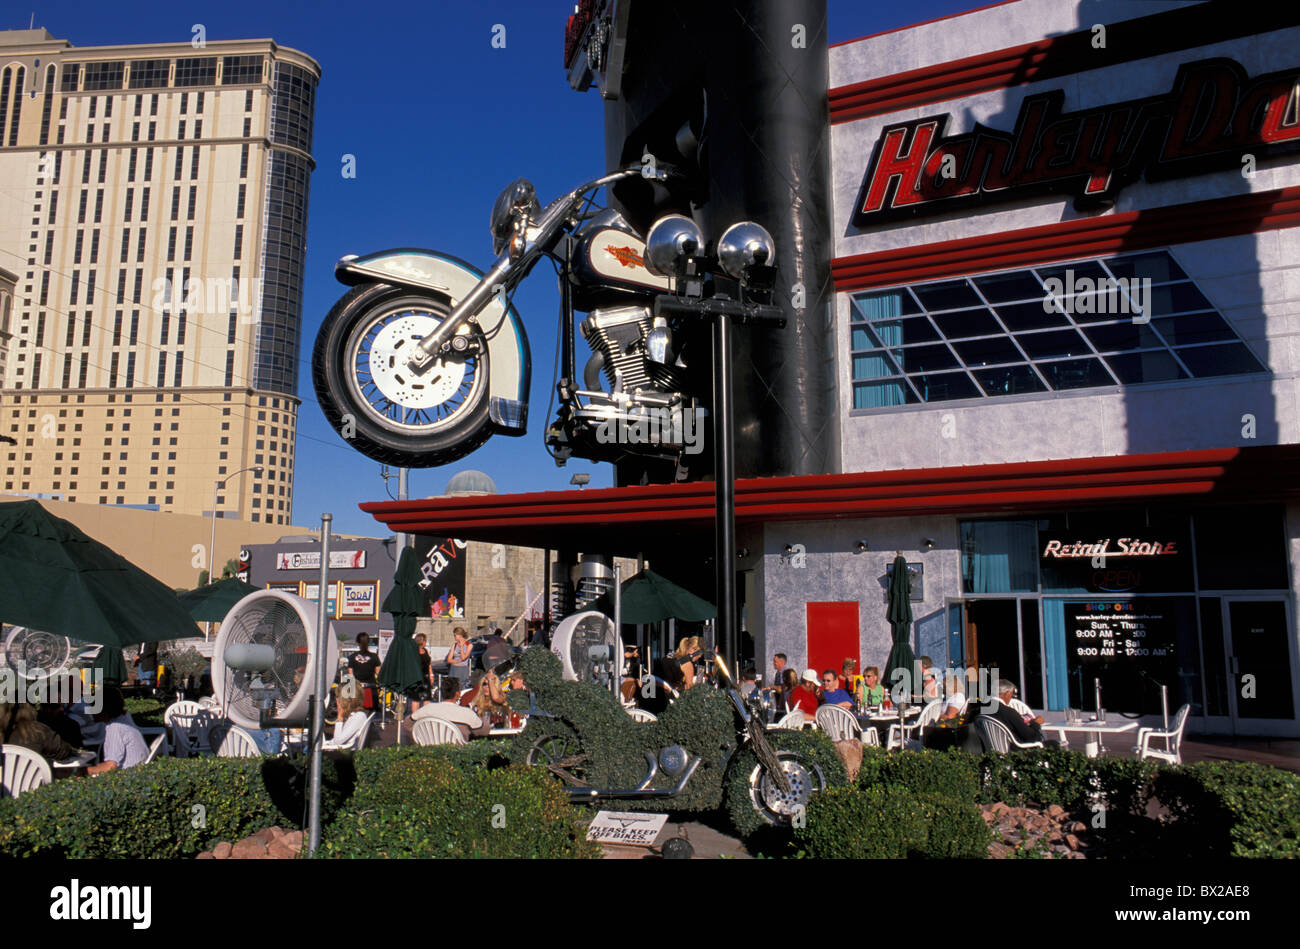 Harley Davidson moto Moto street cafe cafe Strip Las Vegas NEVADA USA United States America Banque D'Images